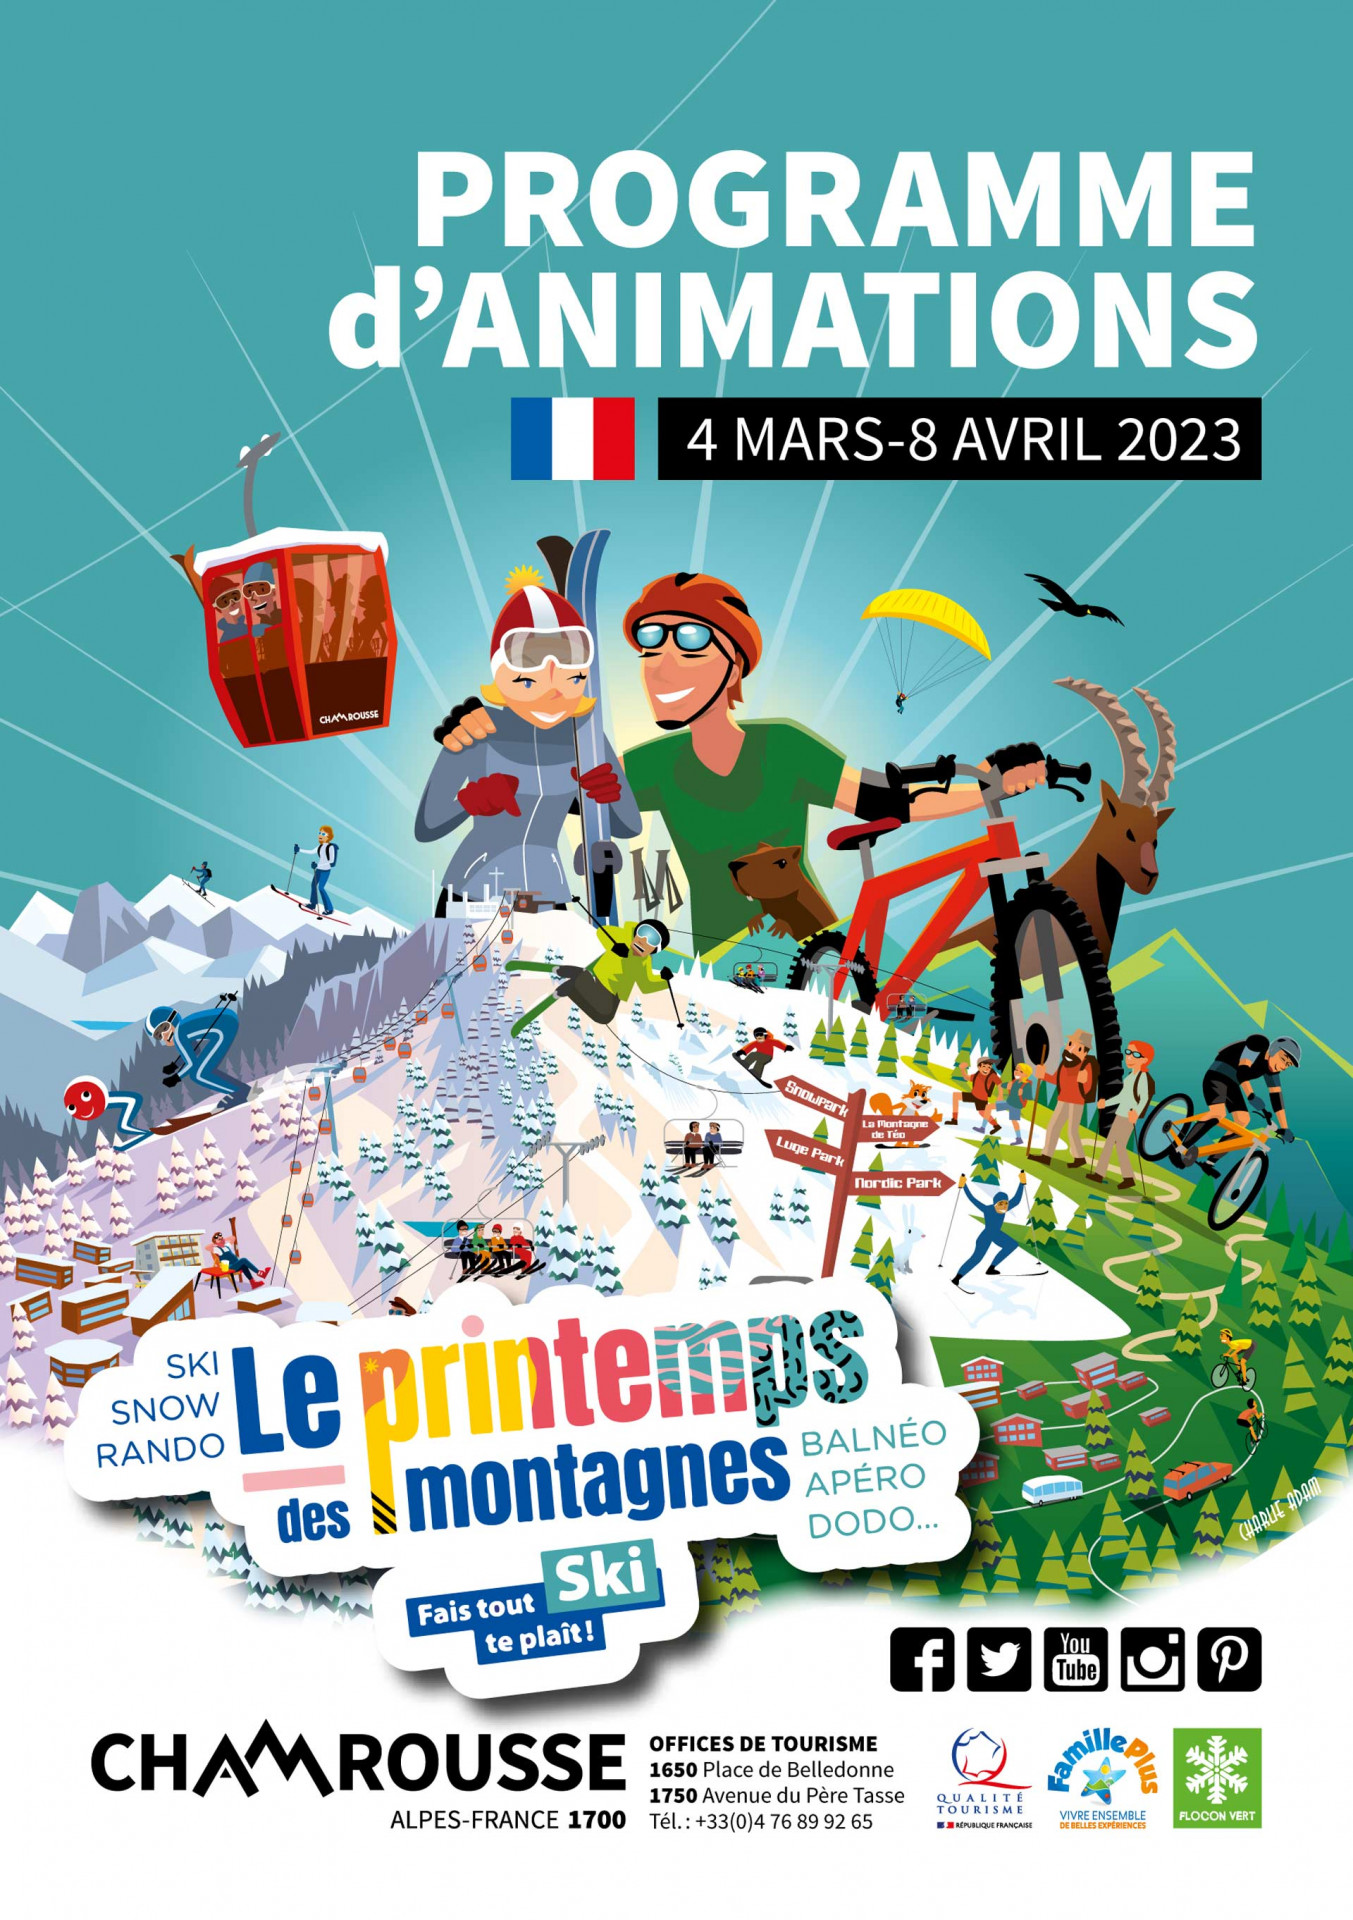 Chamrousse programme animation événement hiver mars-avril 2023 station ski montagne grenoble isère alpes france